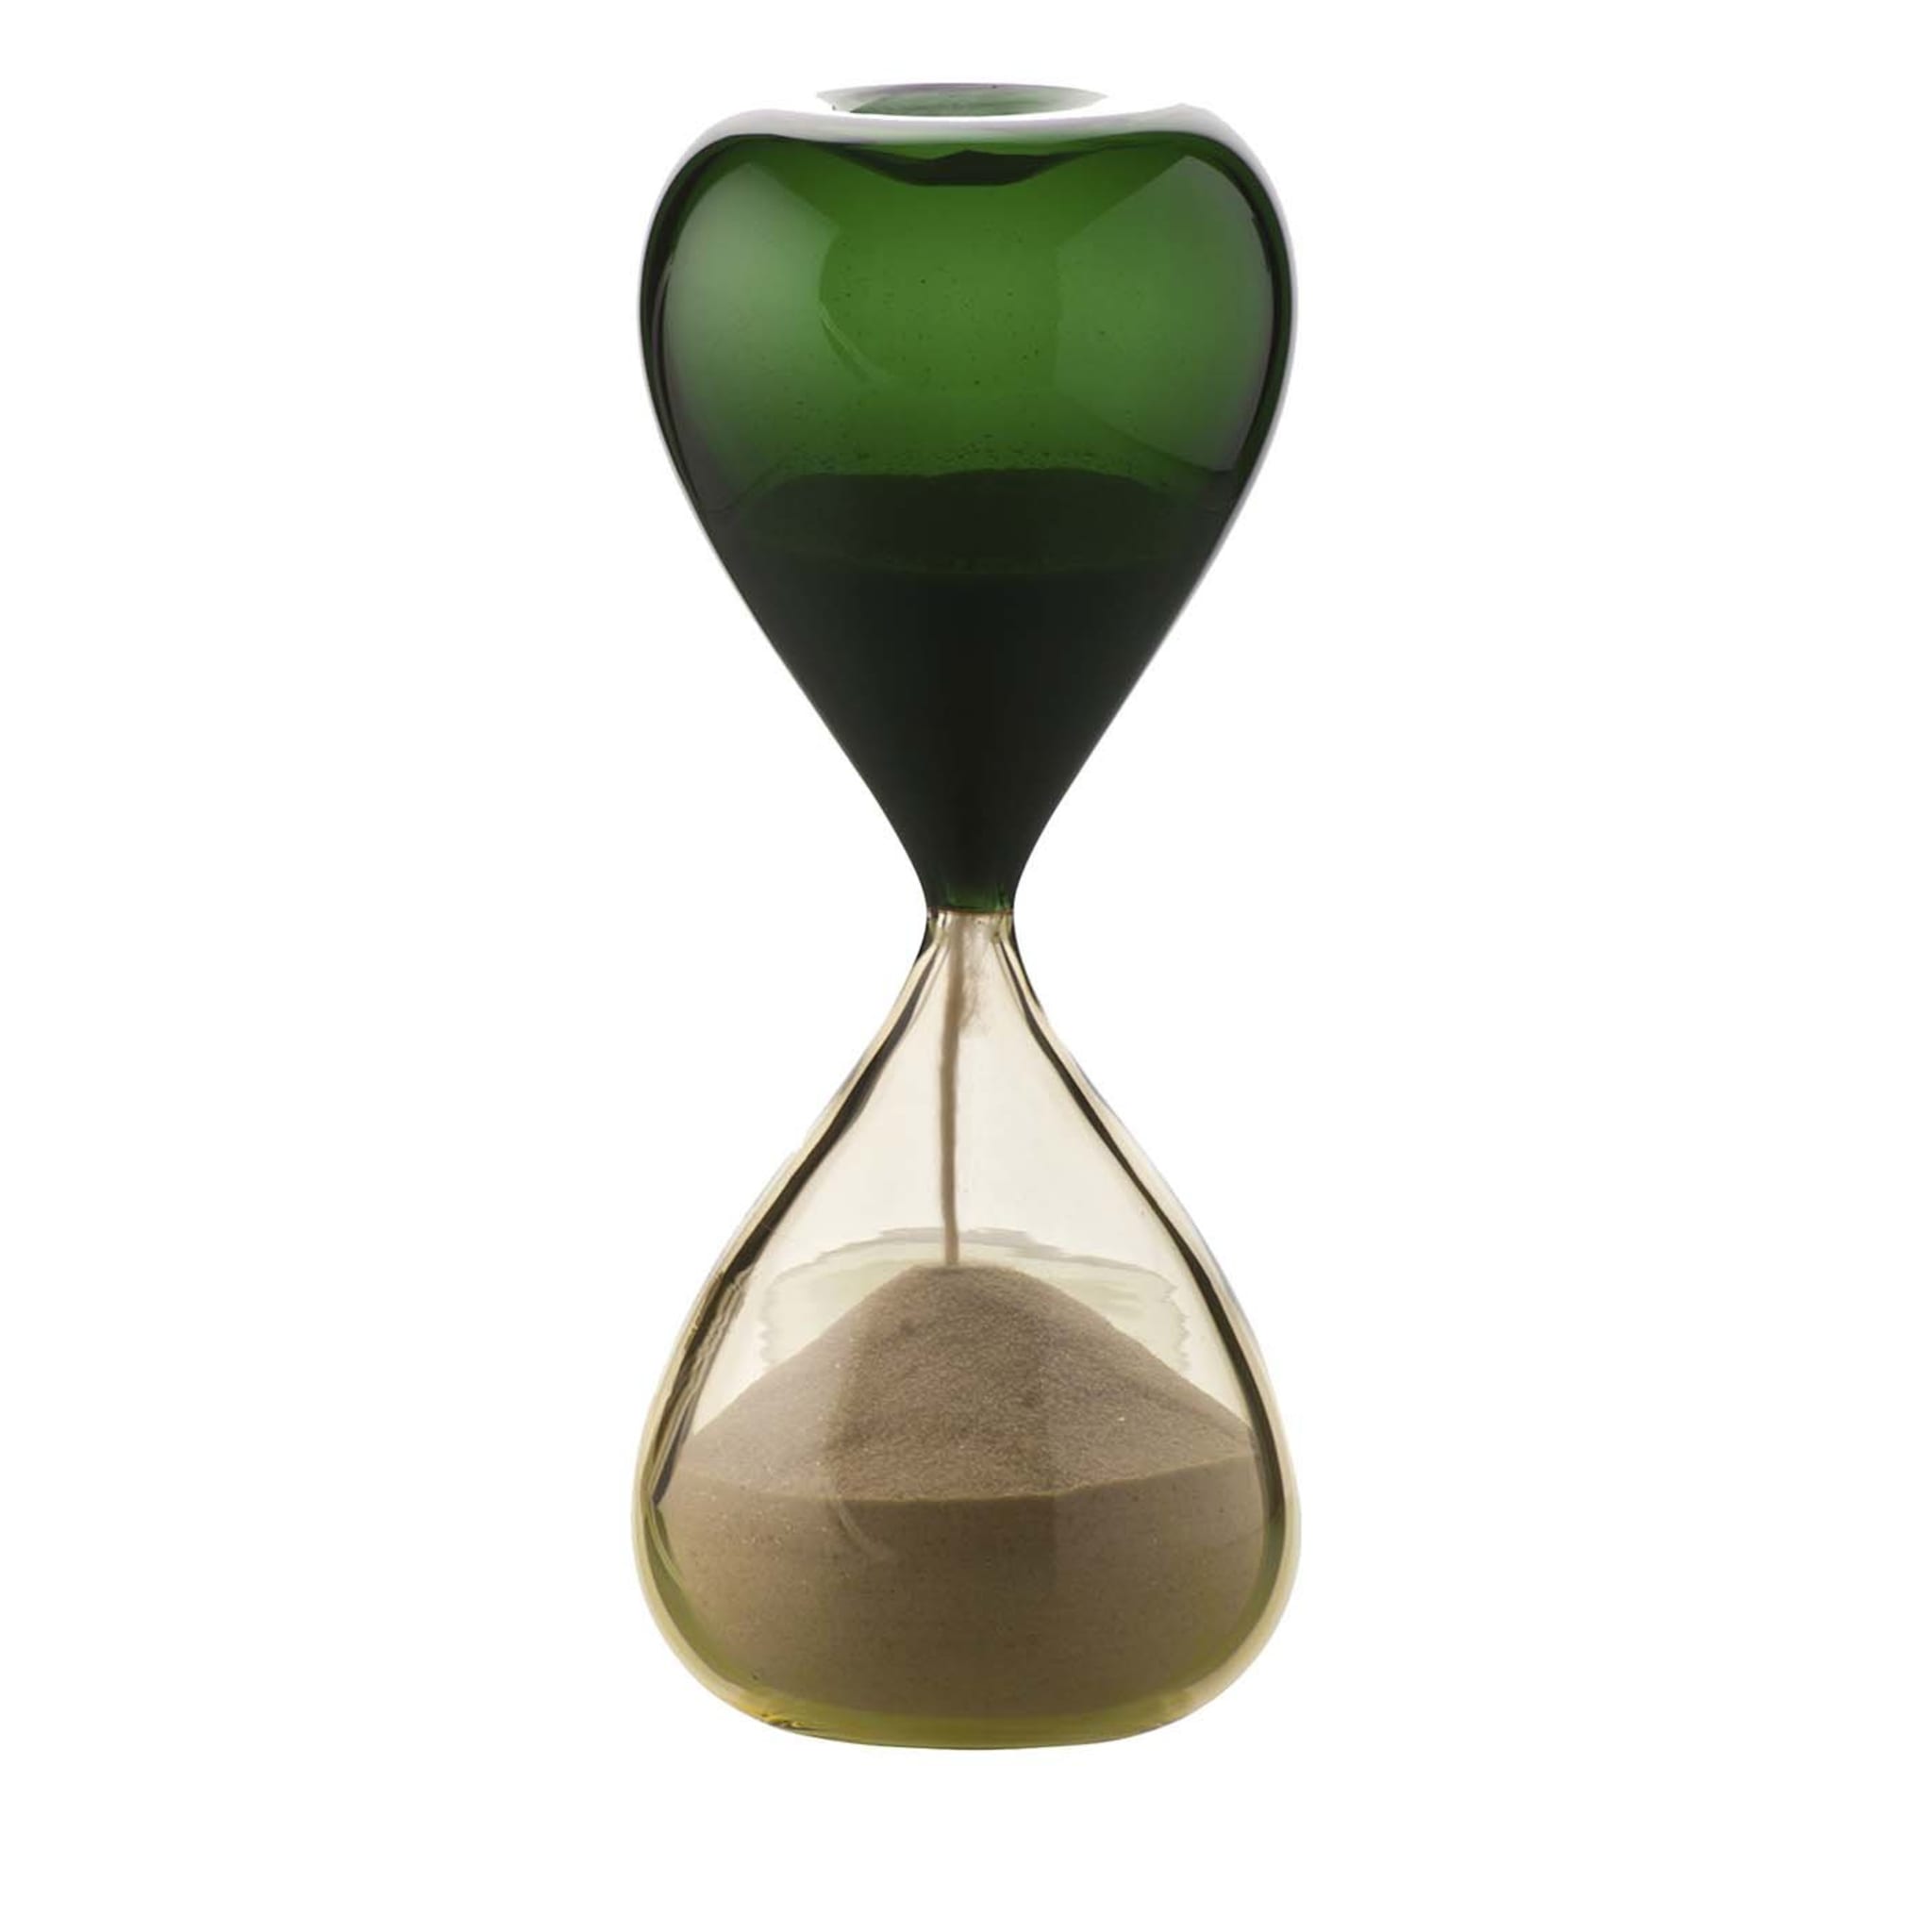 Clessidre Green/Beige Hourglass by Fulvio Bianconi - Main view